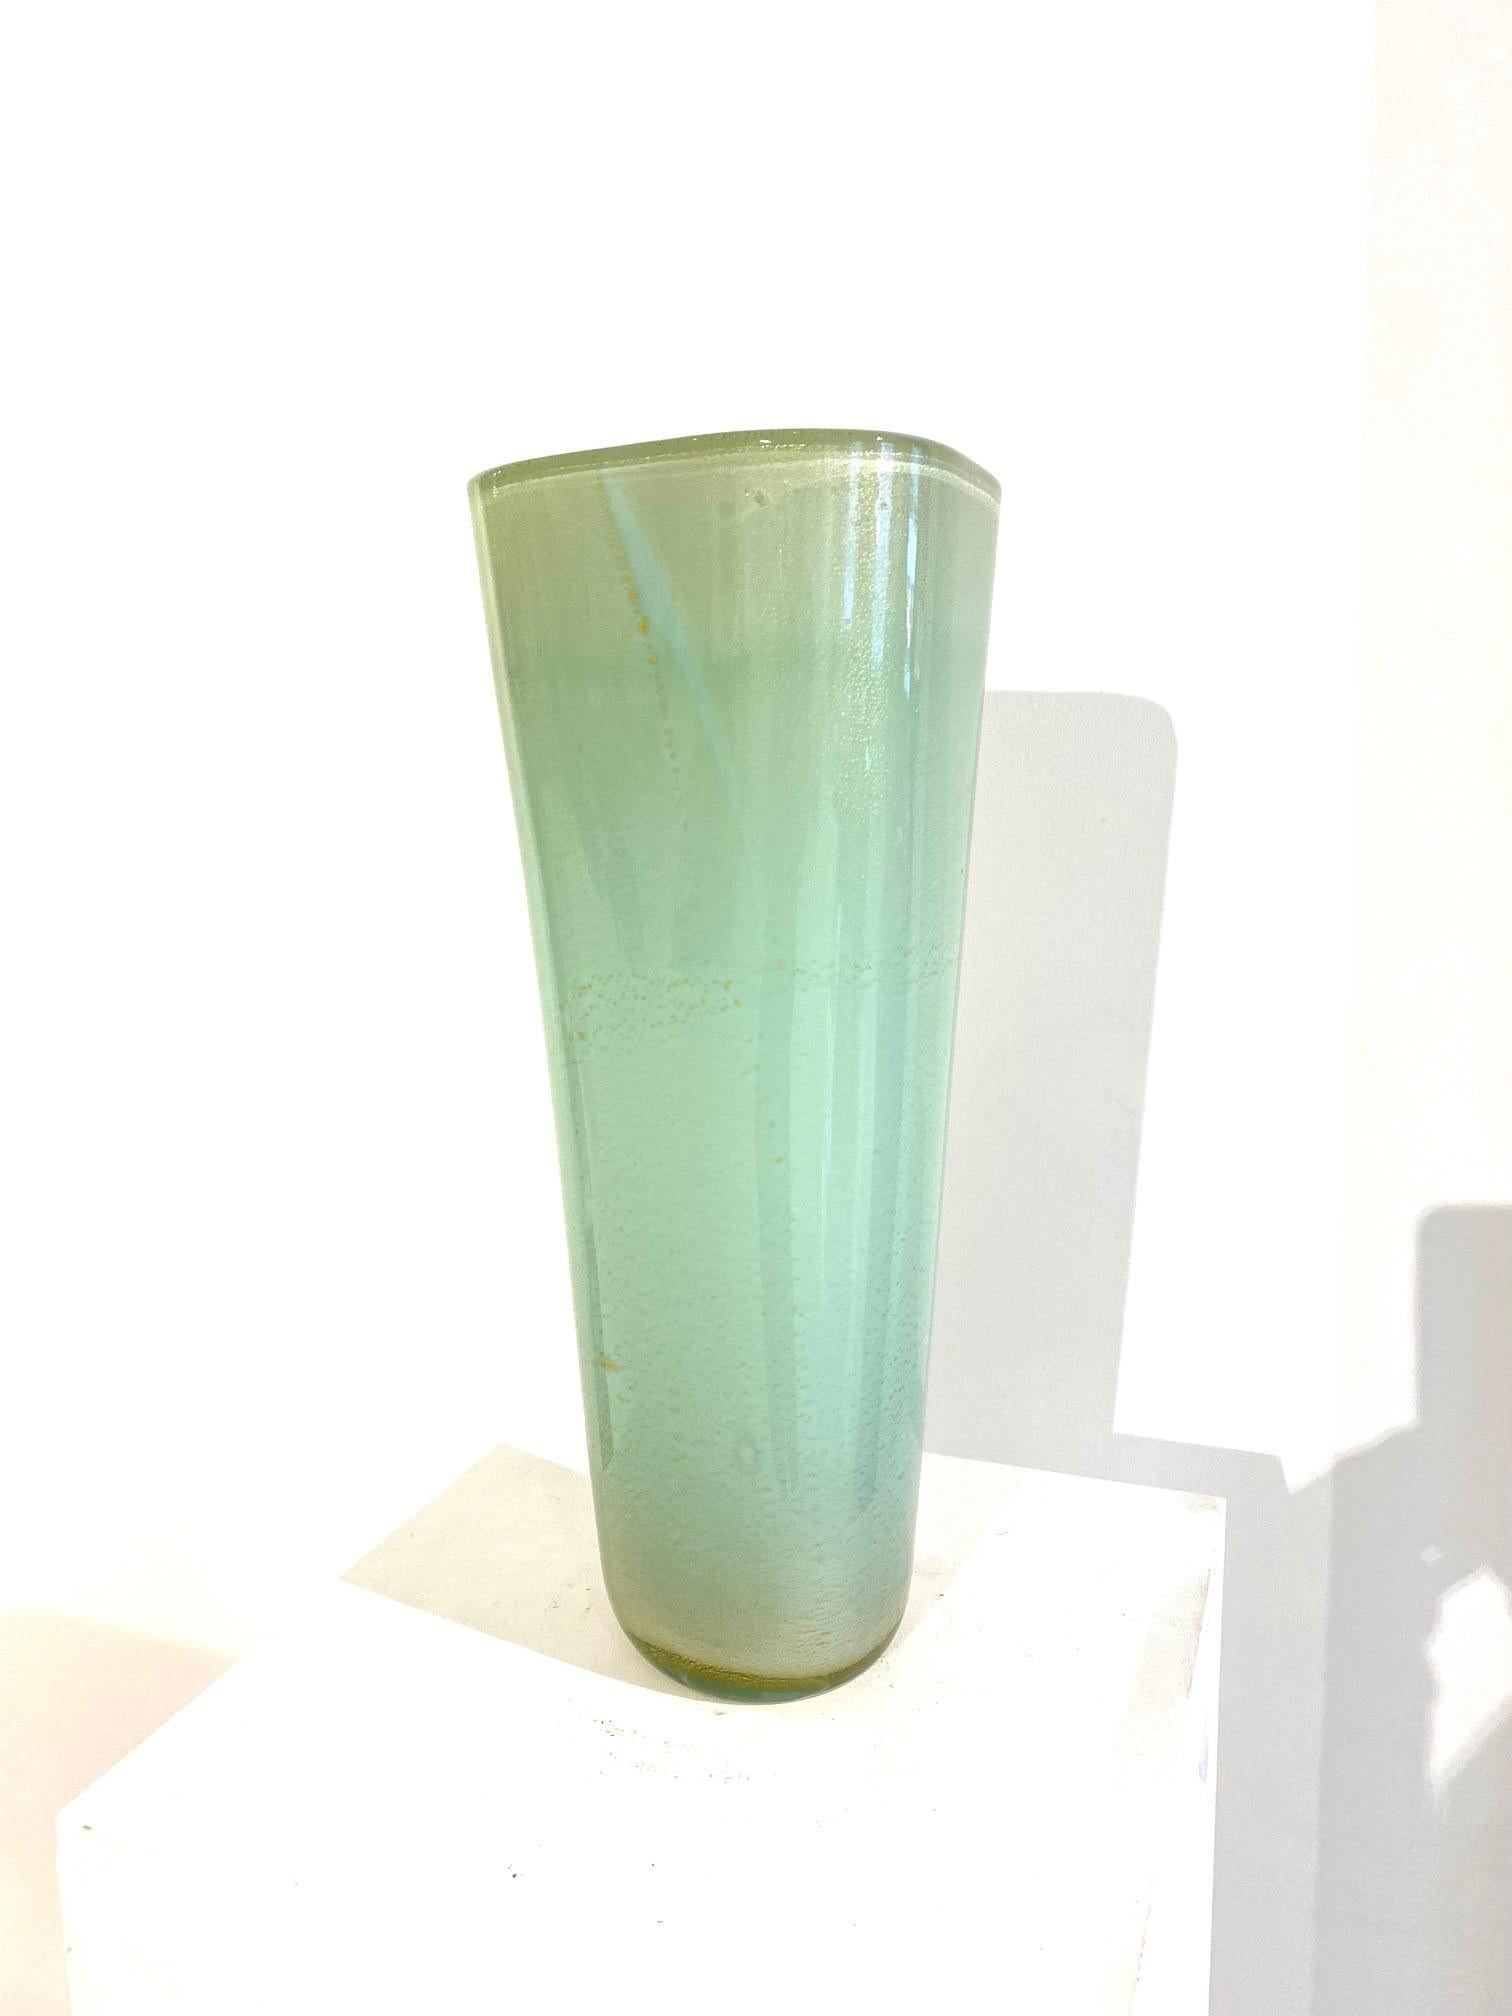 Murano glass “sea foam” and gold specks vase by Seguso Italy: circa 1950

H:17.5 W:6.75 D:6.75 in.

					
